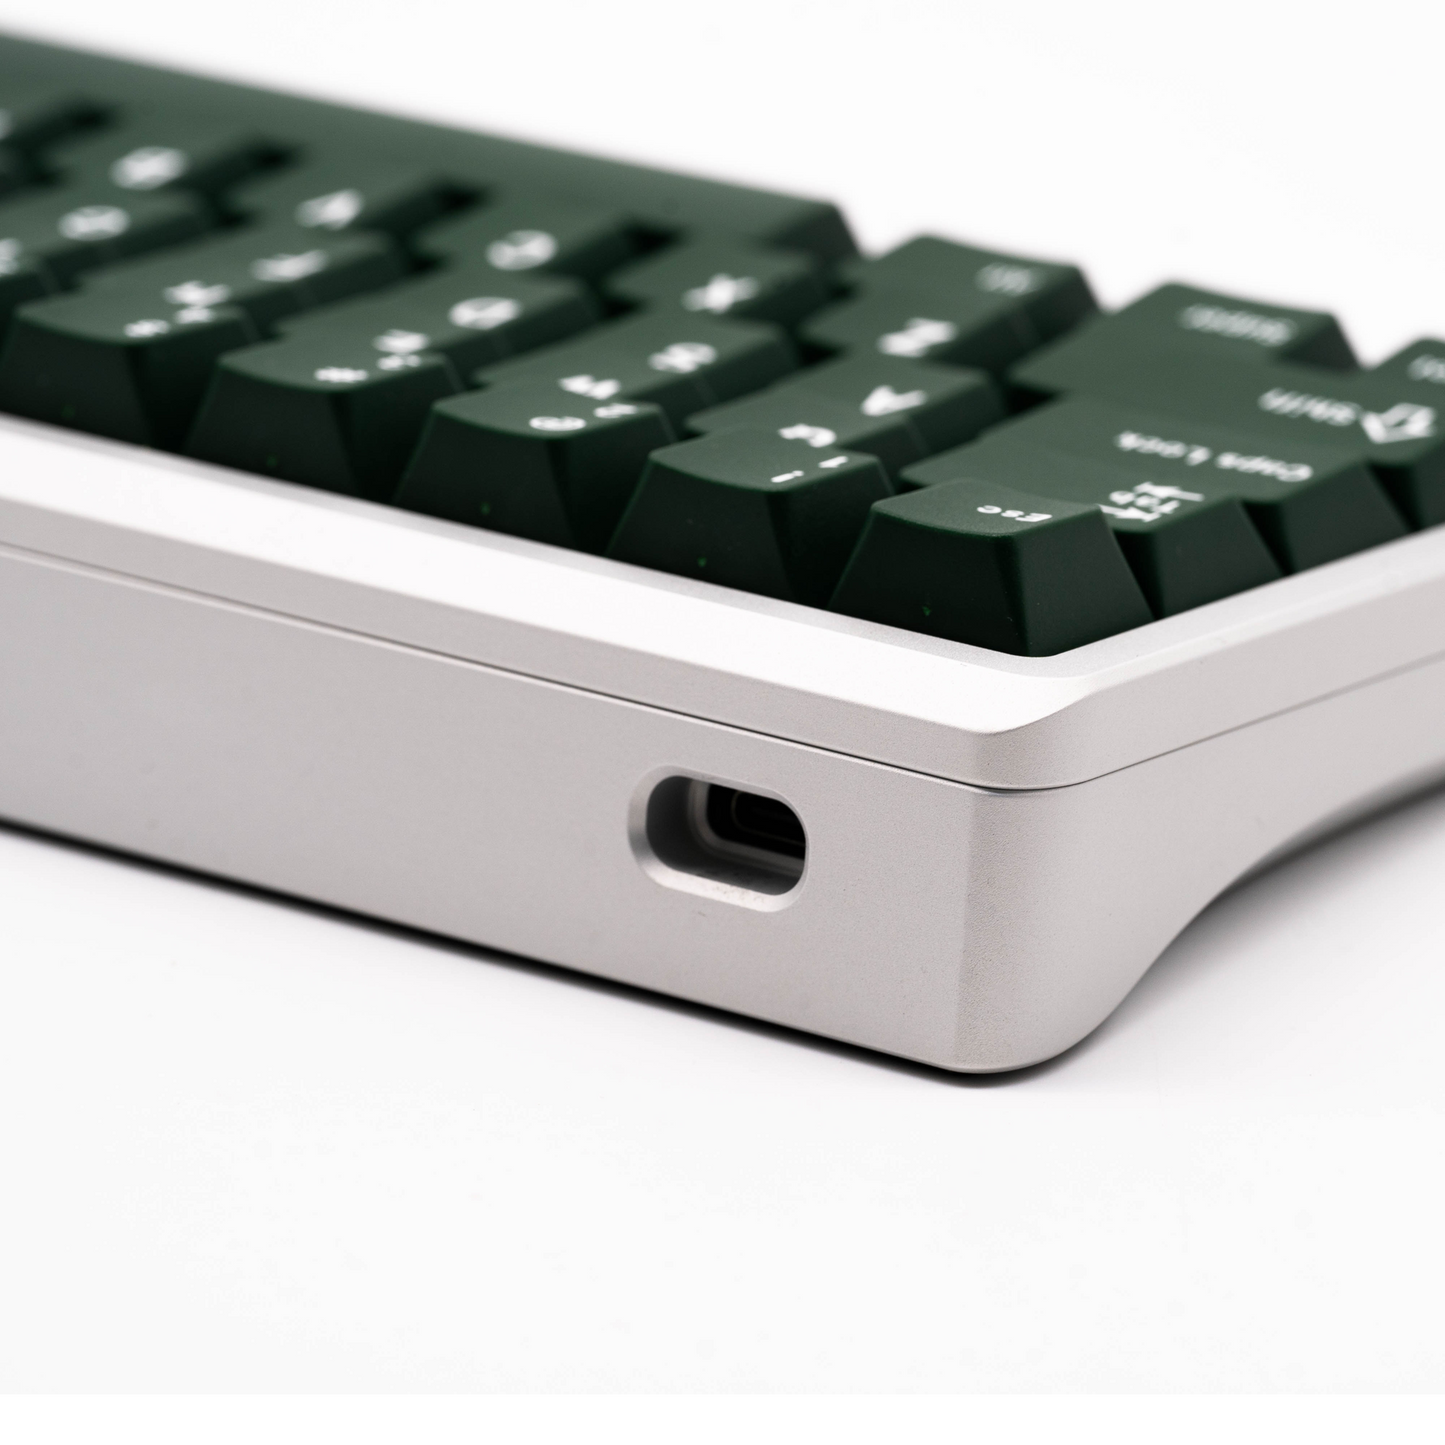 Geonworks' Frog Mini Keyboard Kit